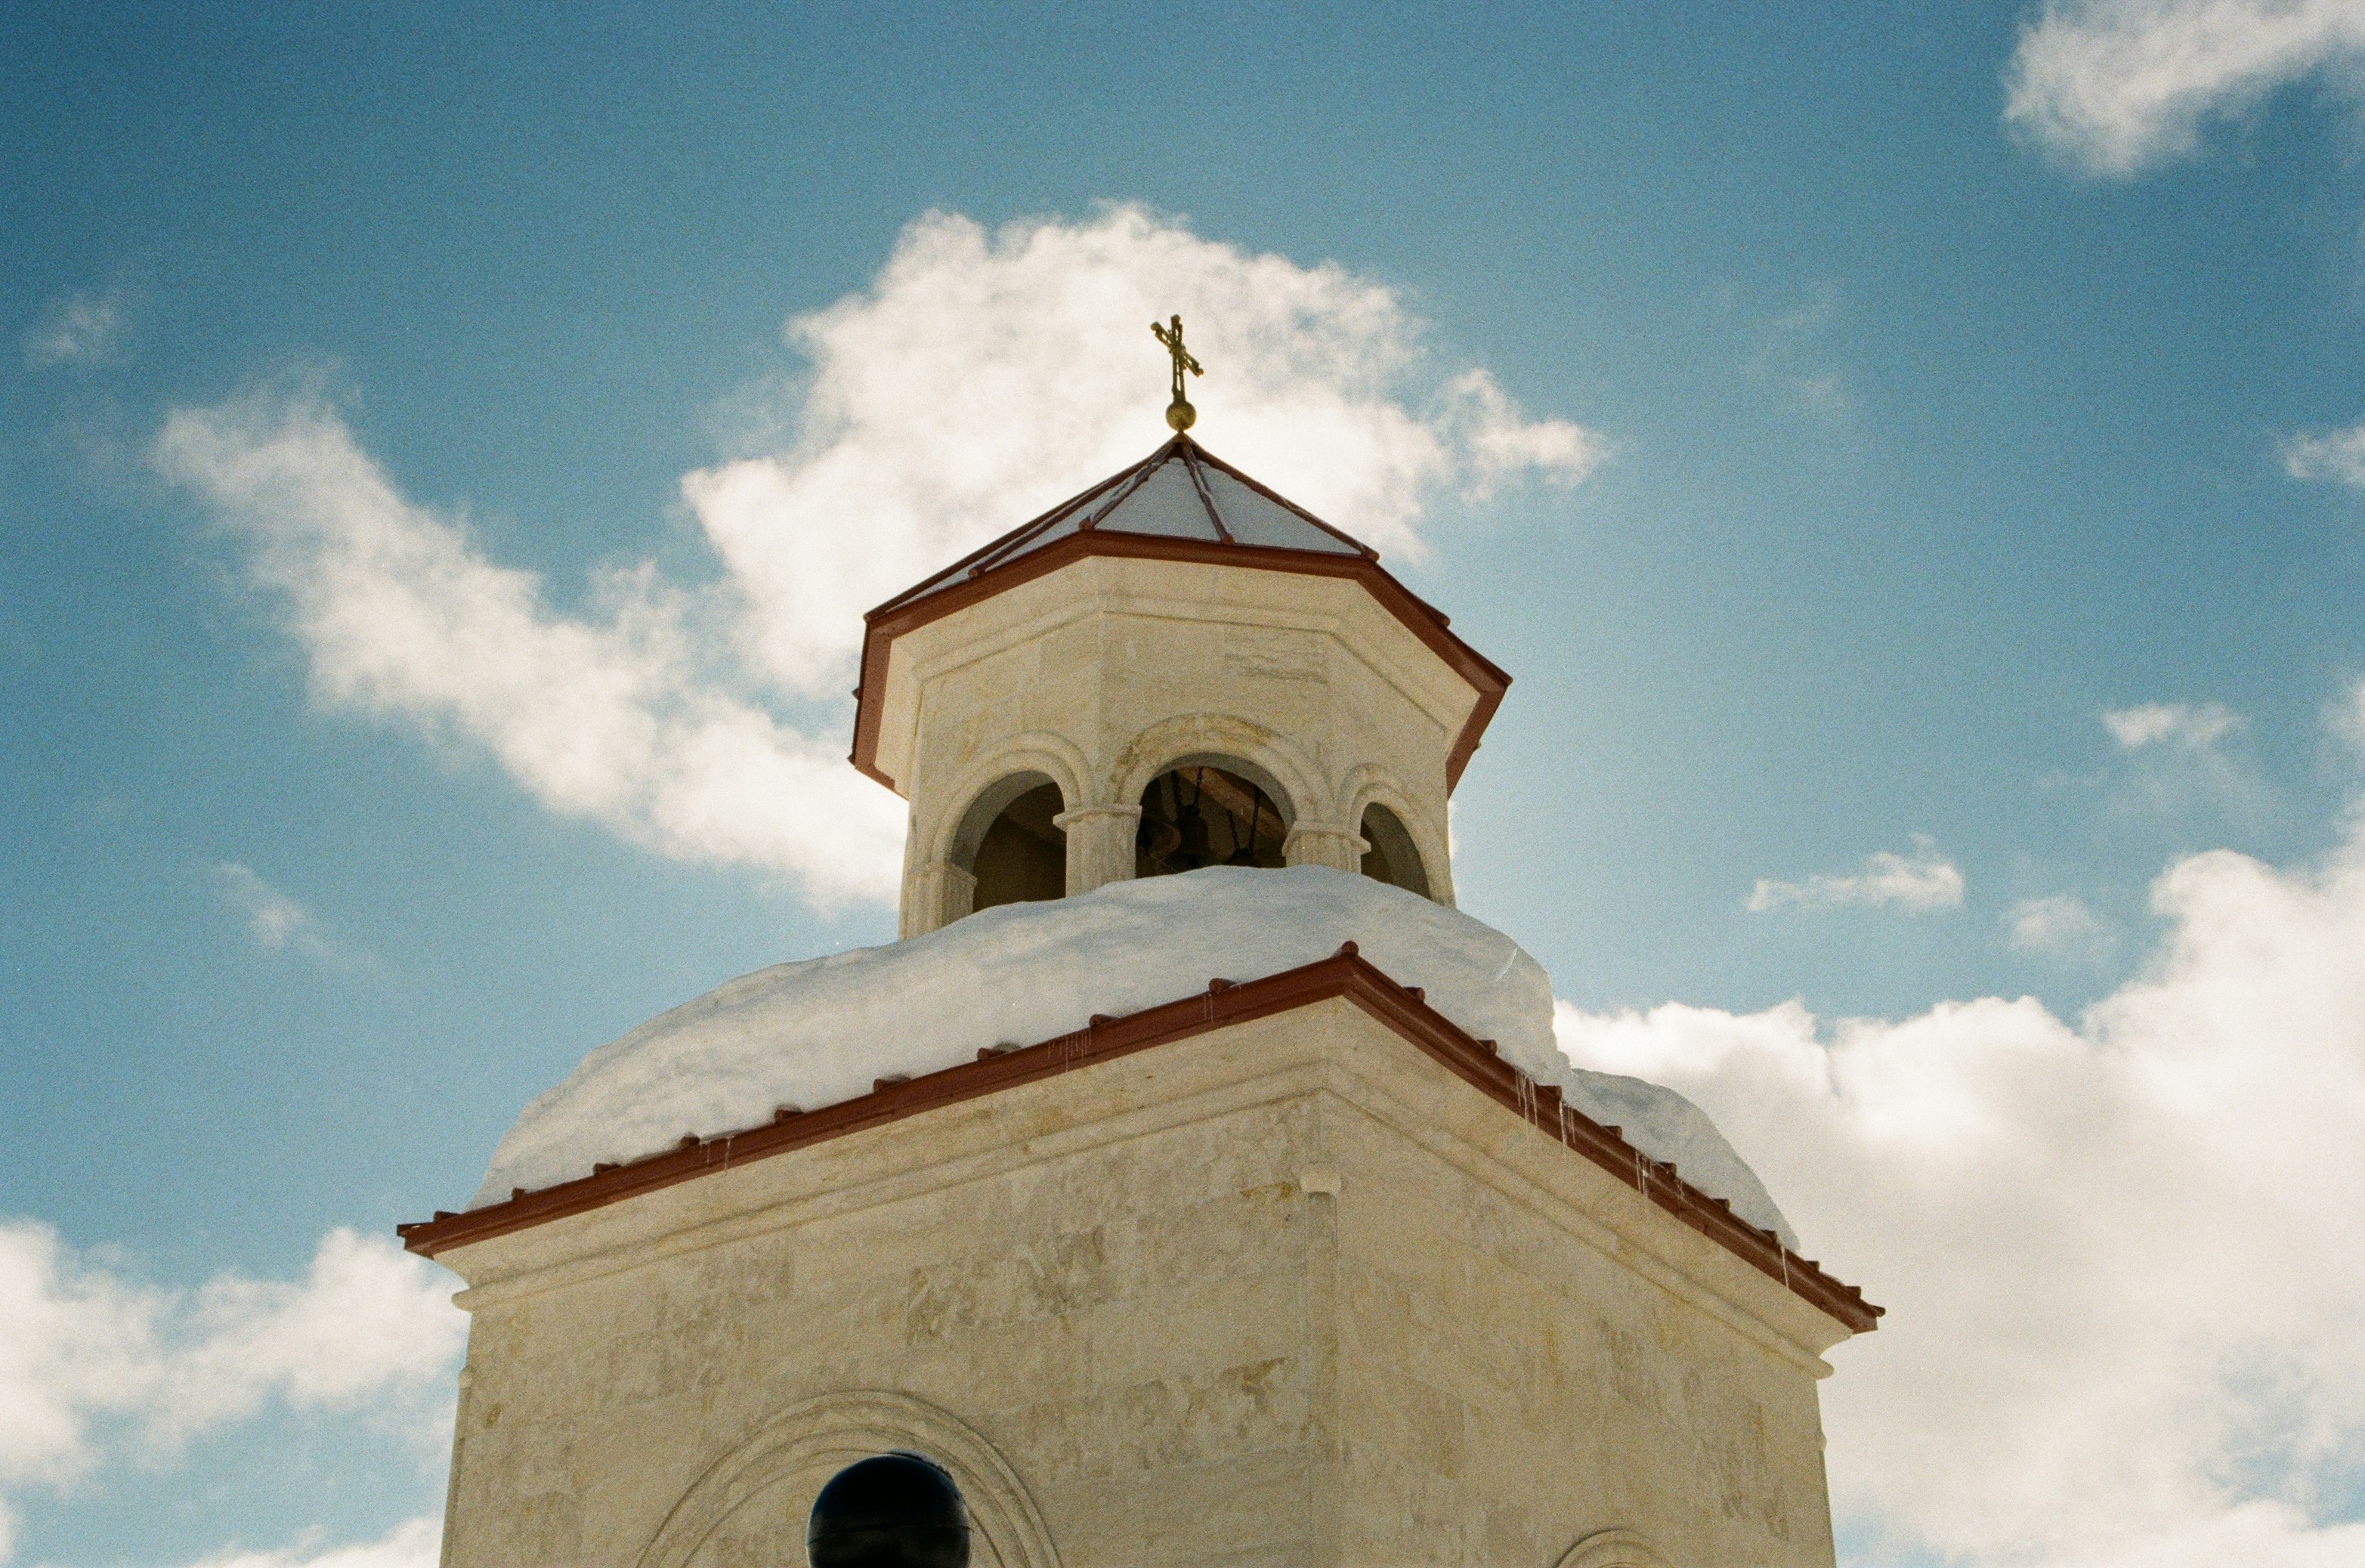 A church in Gudauri, Georgia.